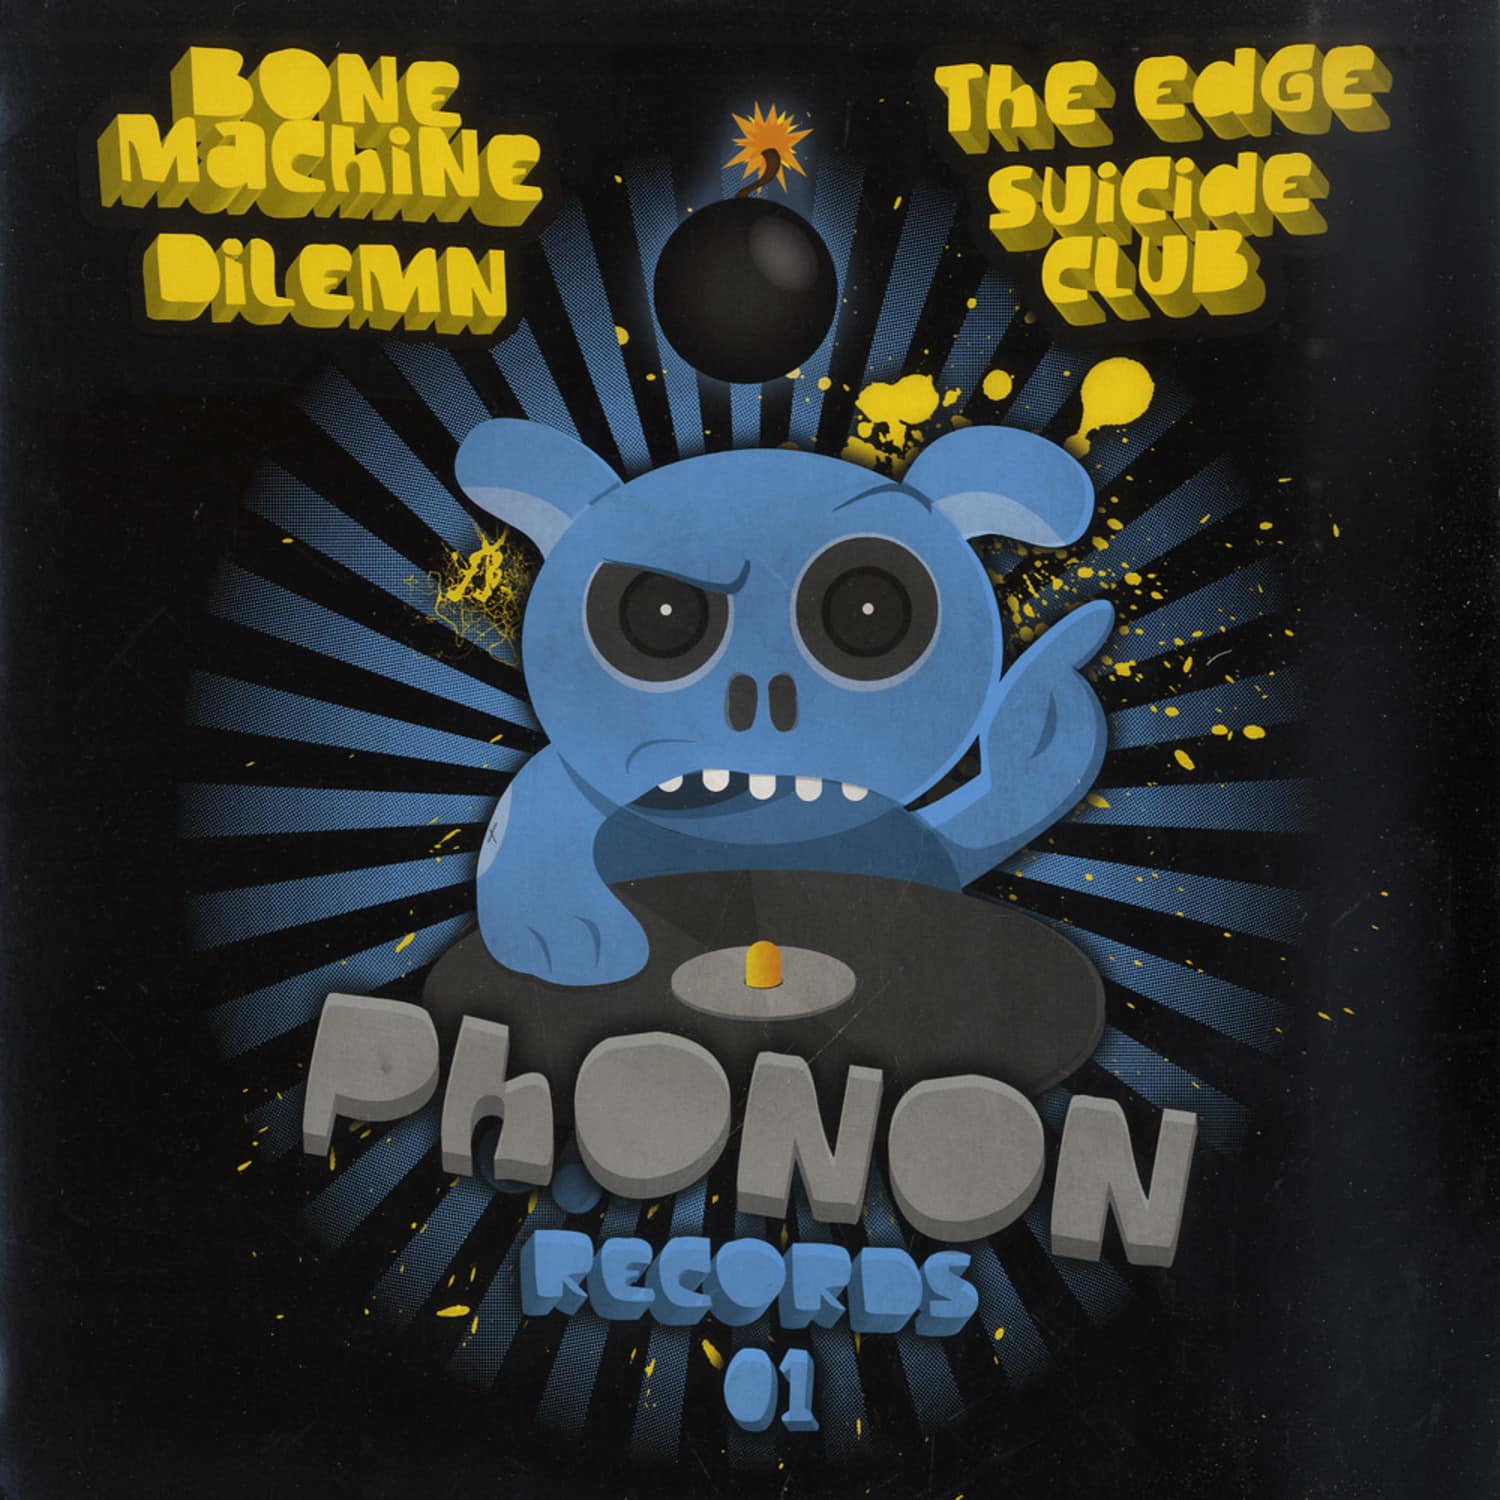 Bone Machine / Dilemn / Suicide Club / The Edge - PHONON RECORDS 01